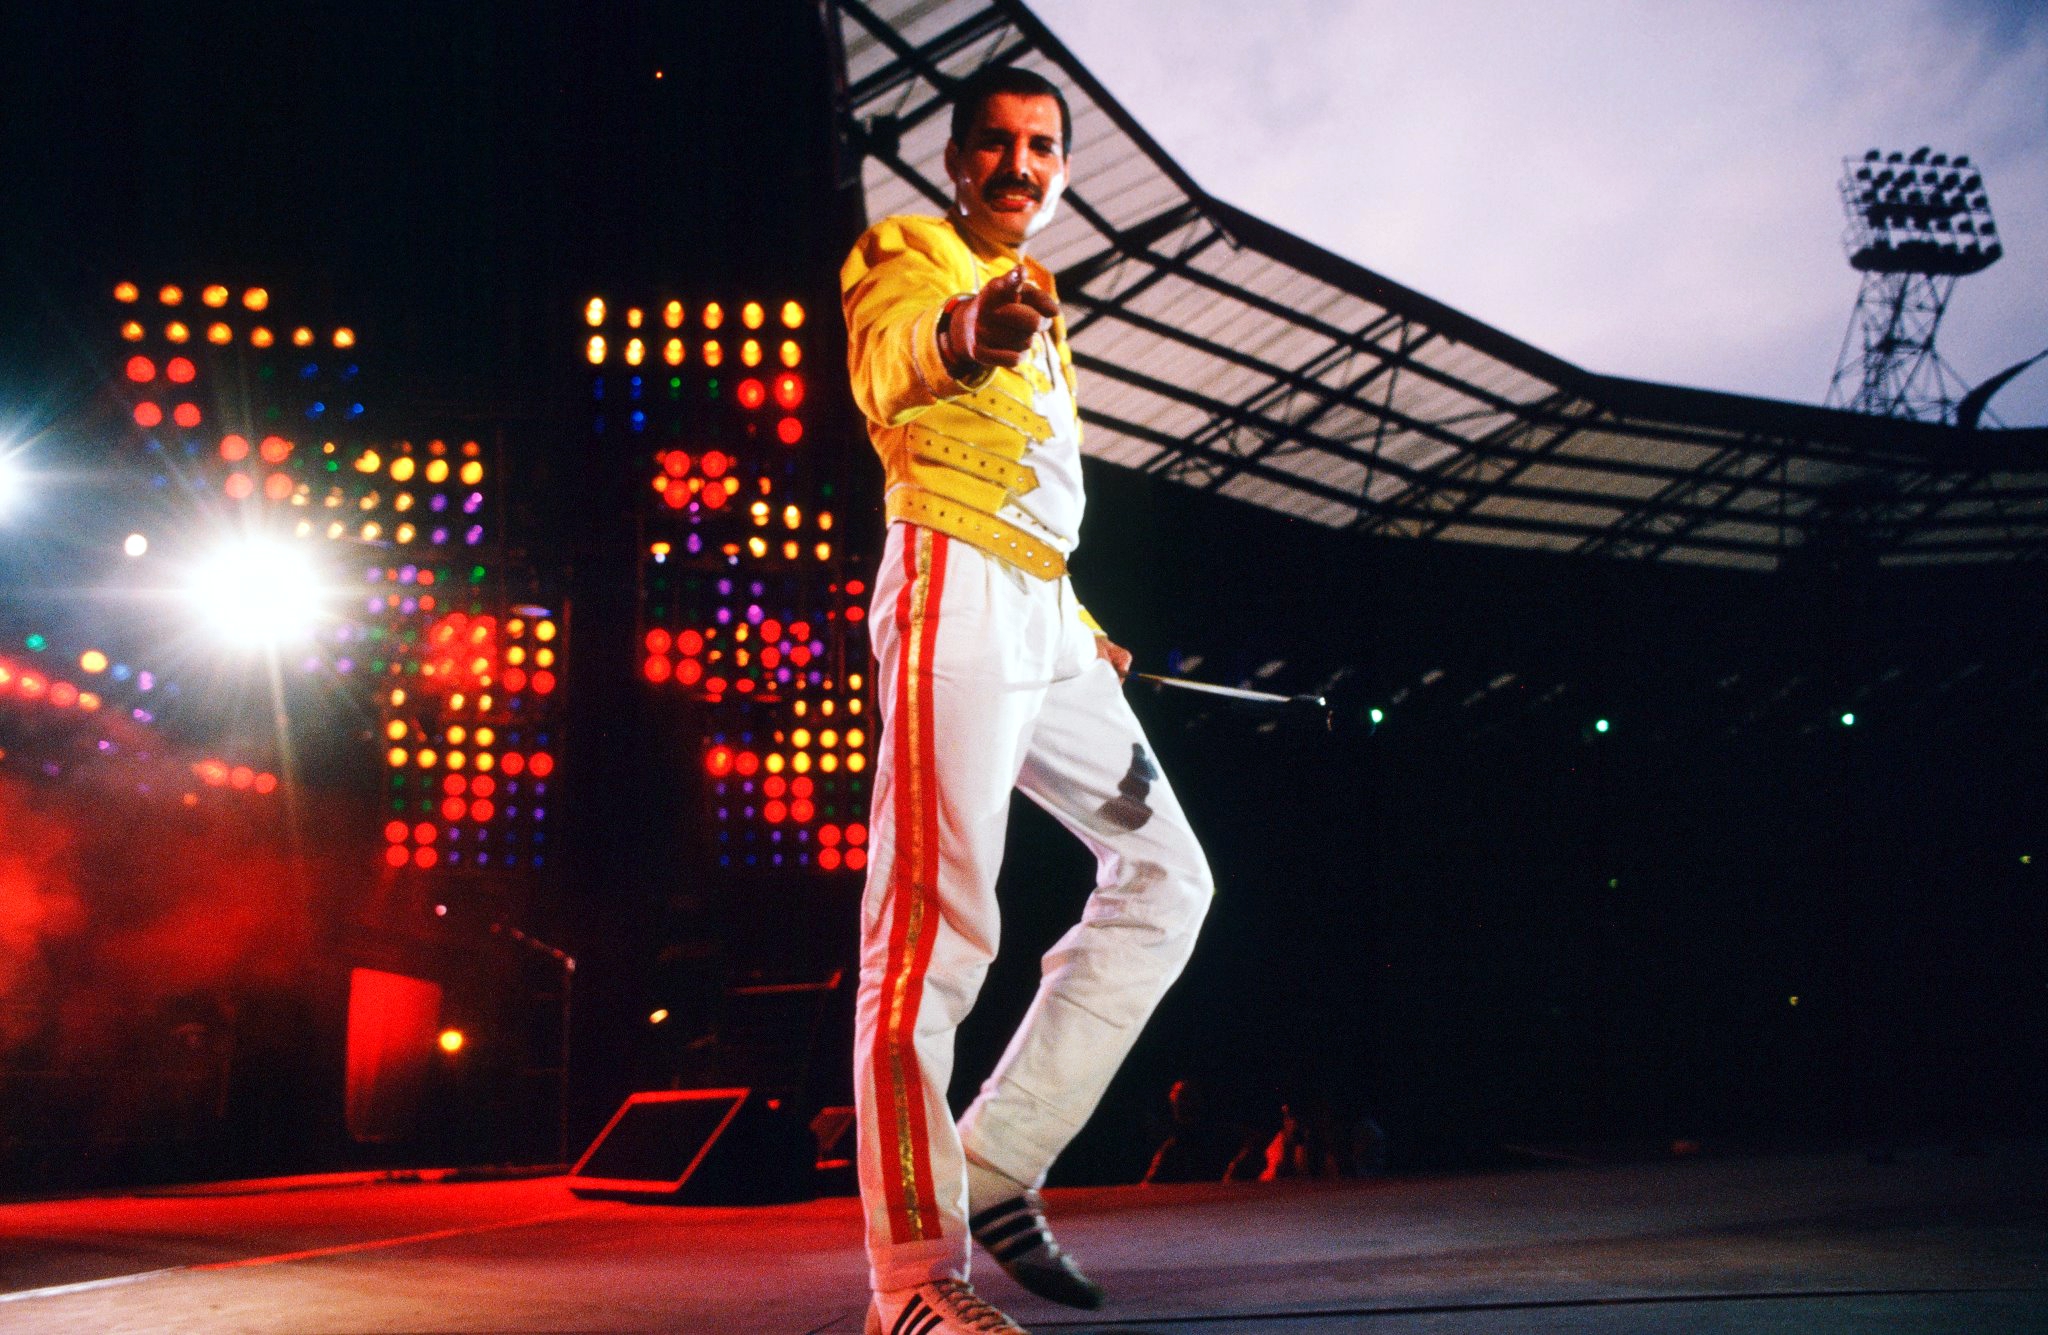 Меркьюри стадион. Freddie Mercury. Фредди Меркьюри Уэмбли. Queen Уэмбли 1986. Группа Квин Фредди Меркьюри.